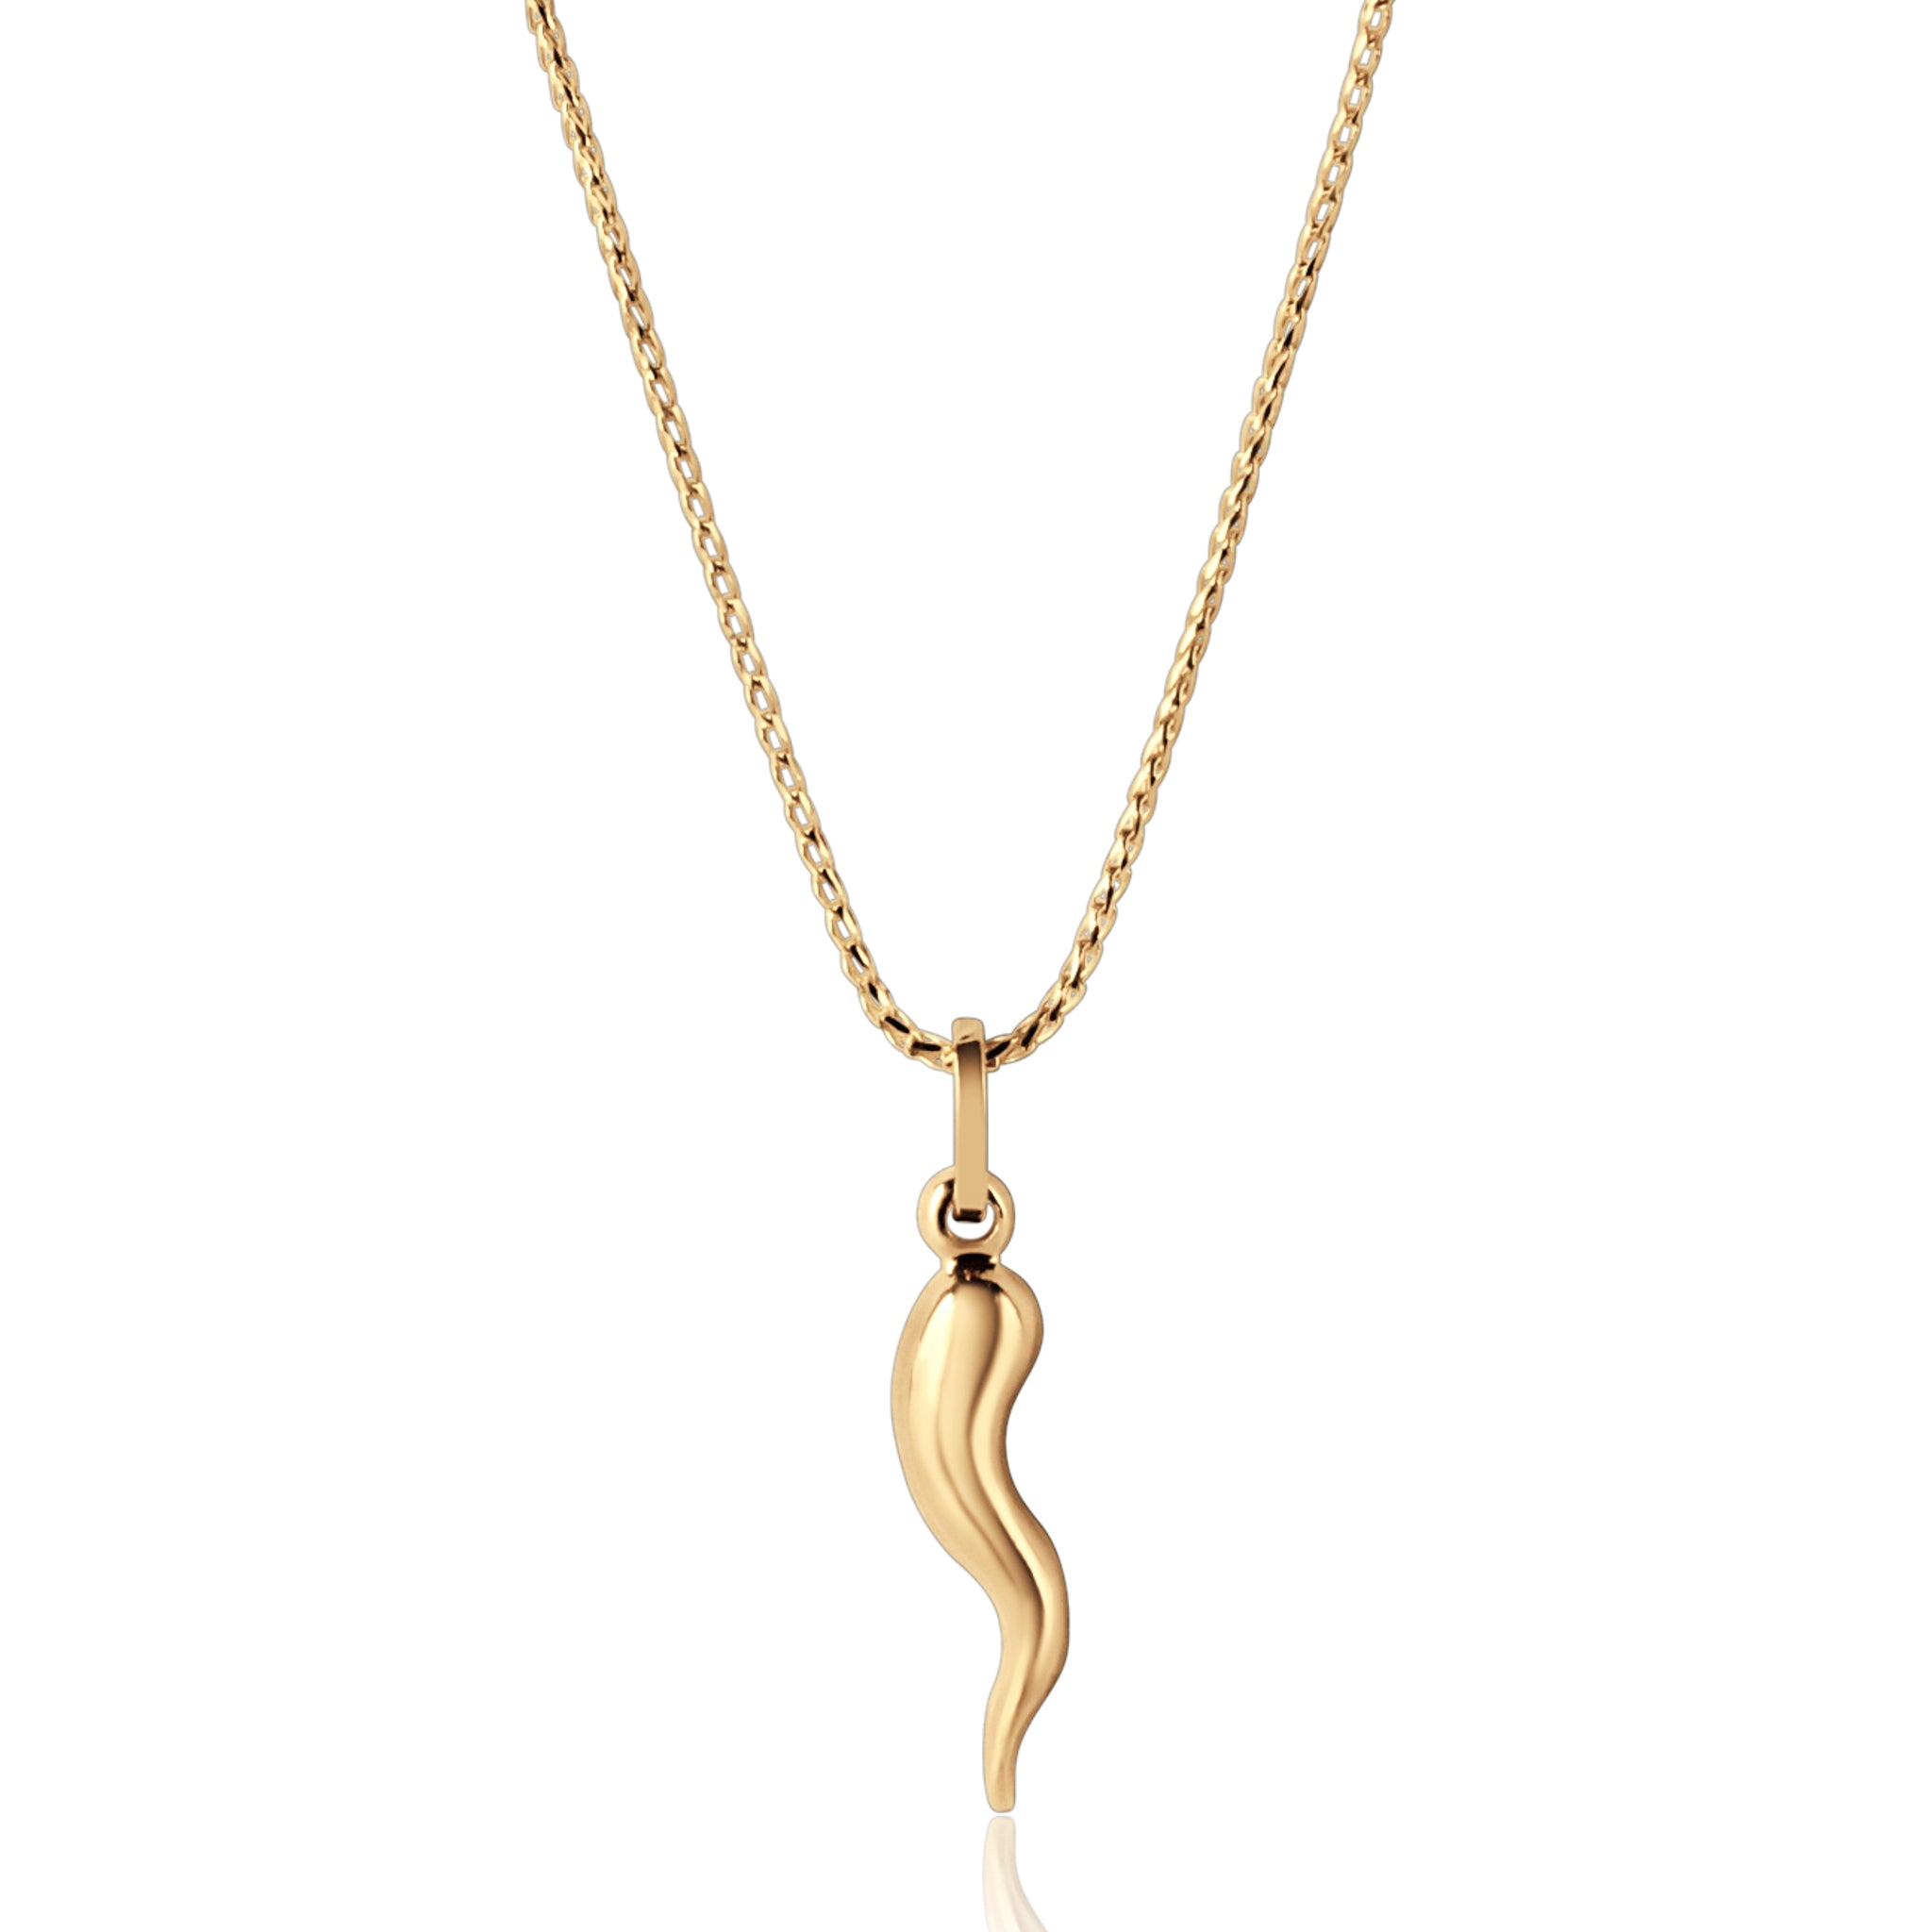 franco gold chain and corno pendant, made in italy